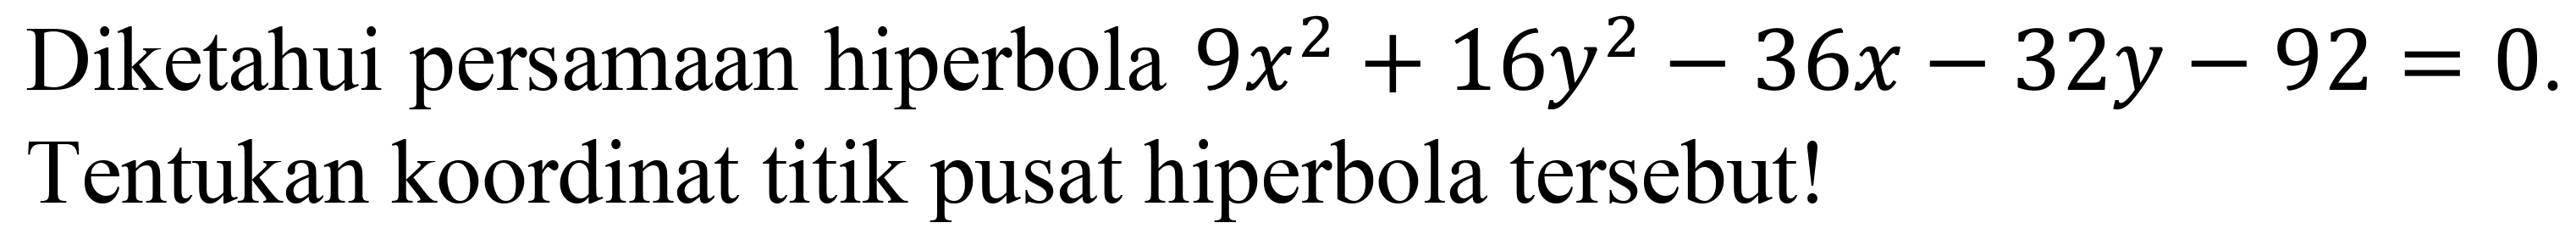 Diketahui persamaan hiperbola  9 x^(2)+16 y^(2)-36 x-32 y-92=0 . Tentukan koordinat titik pusat hiperbola tersebut!